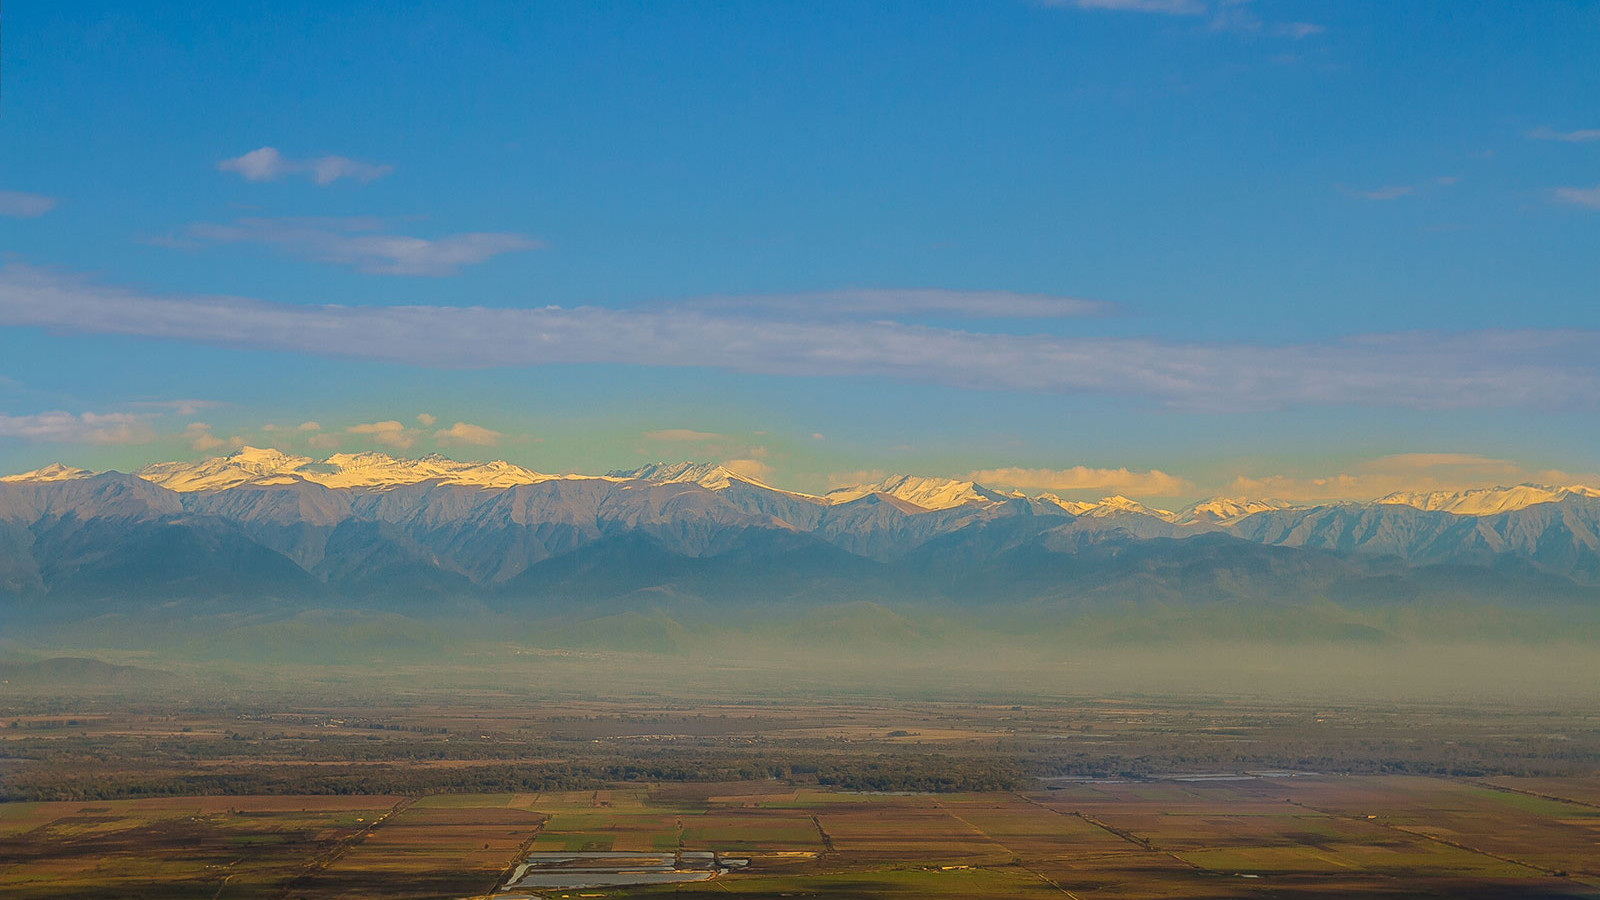 Greater Caucasus mountains in Kakheti